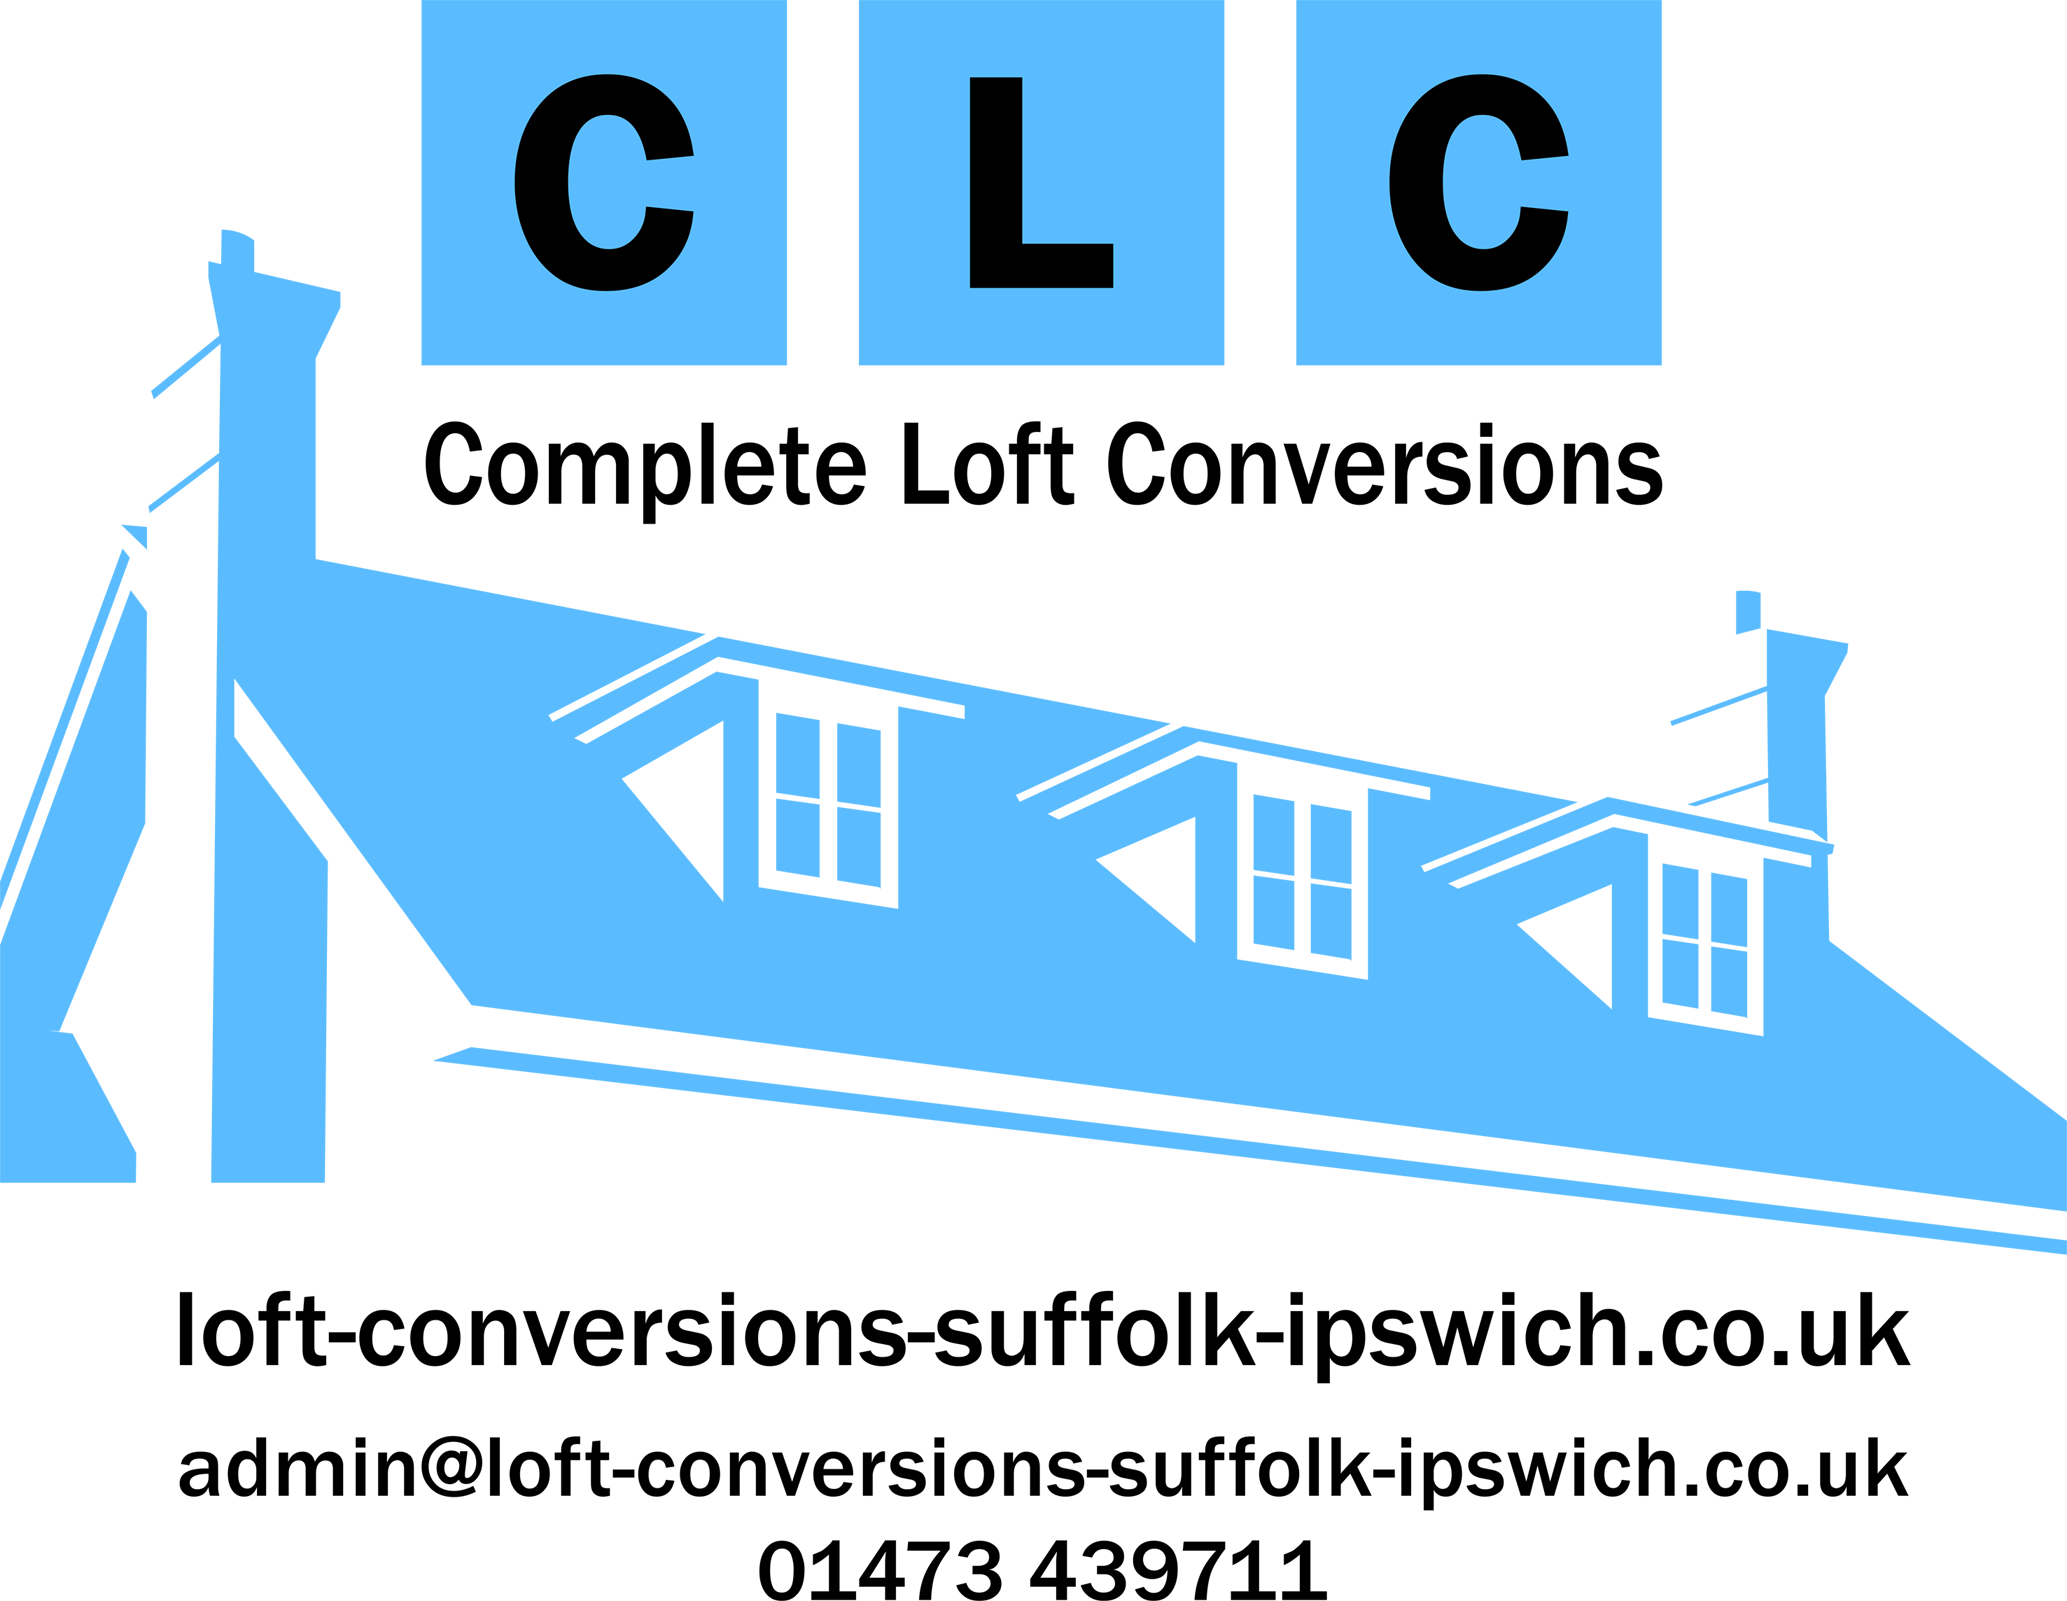 Loft conversions in Suffolk Ipswich